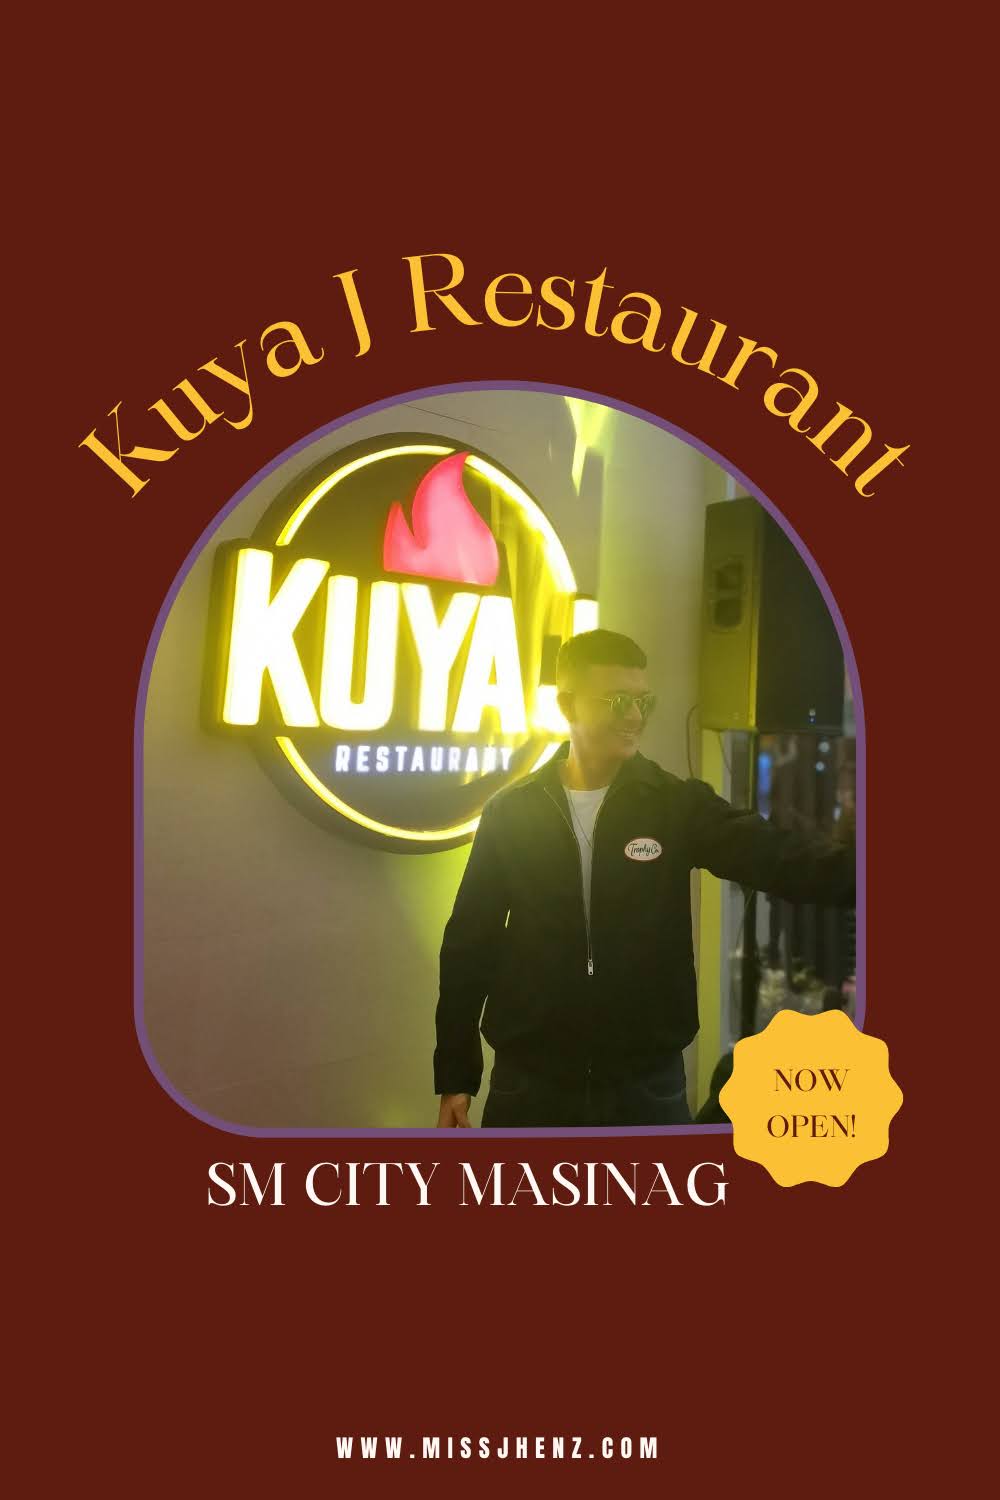 Kuya J Restaurant is Now Open at SM City Masinag